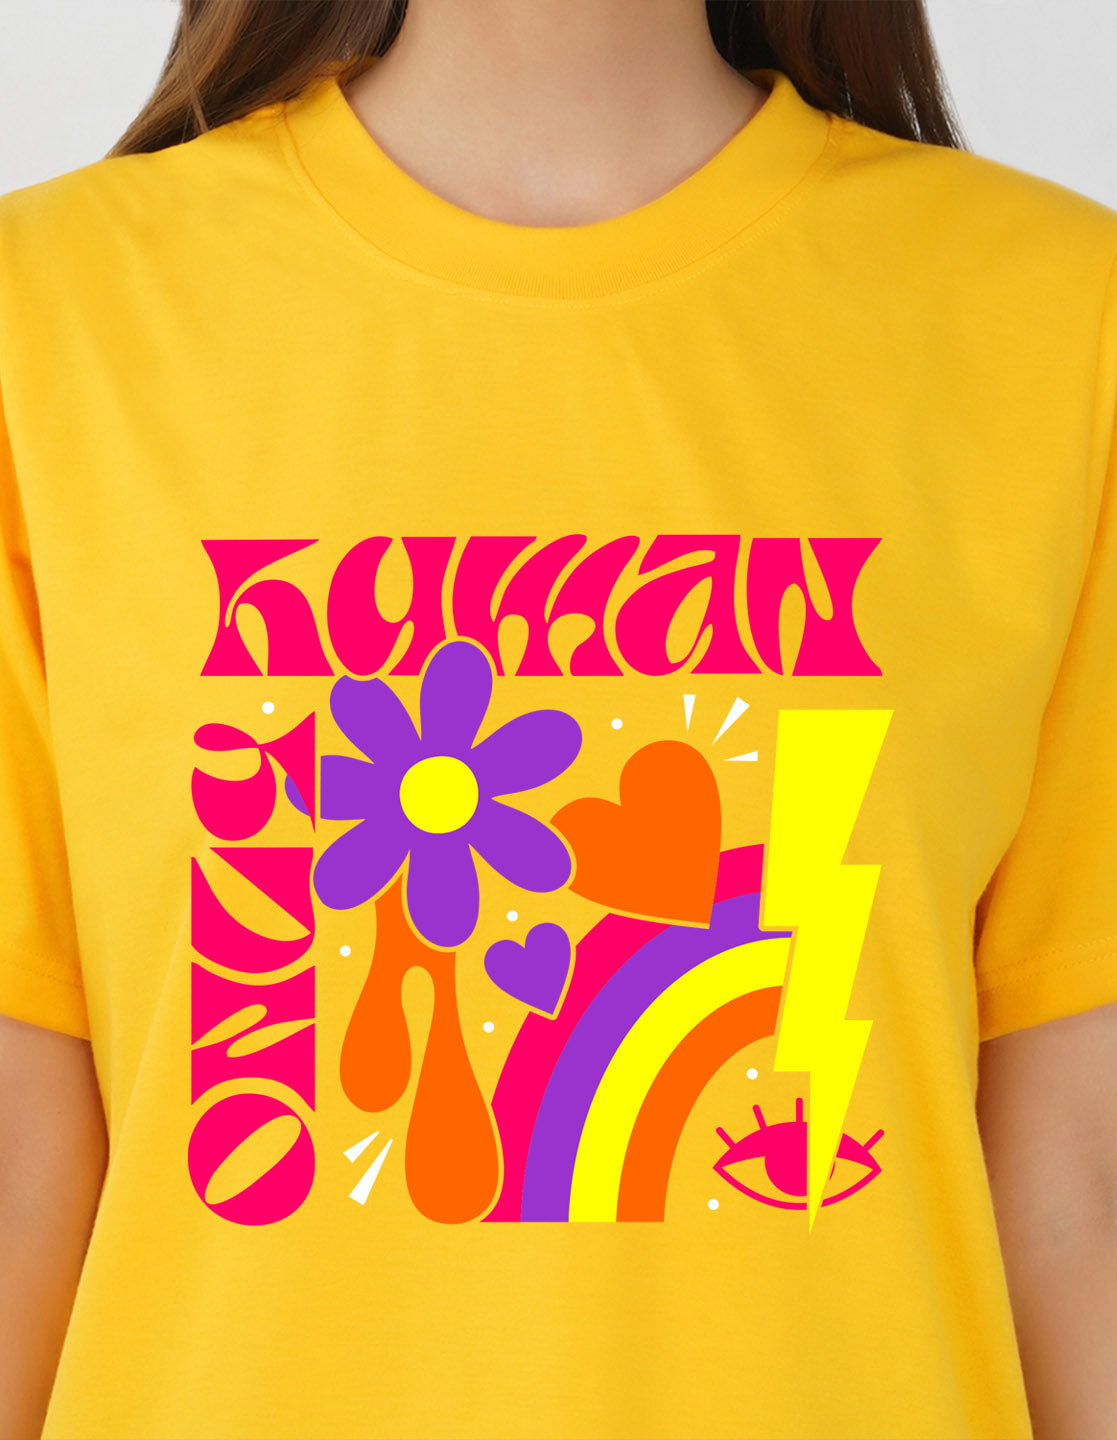 Nusyl Women Yellow Abstract pint oversized t-shirt